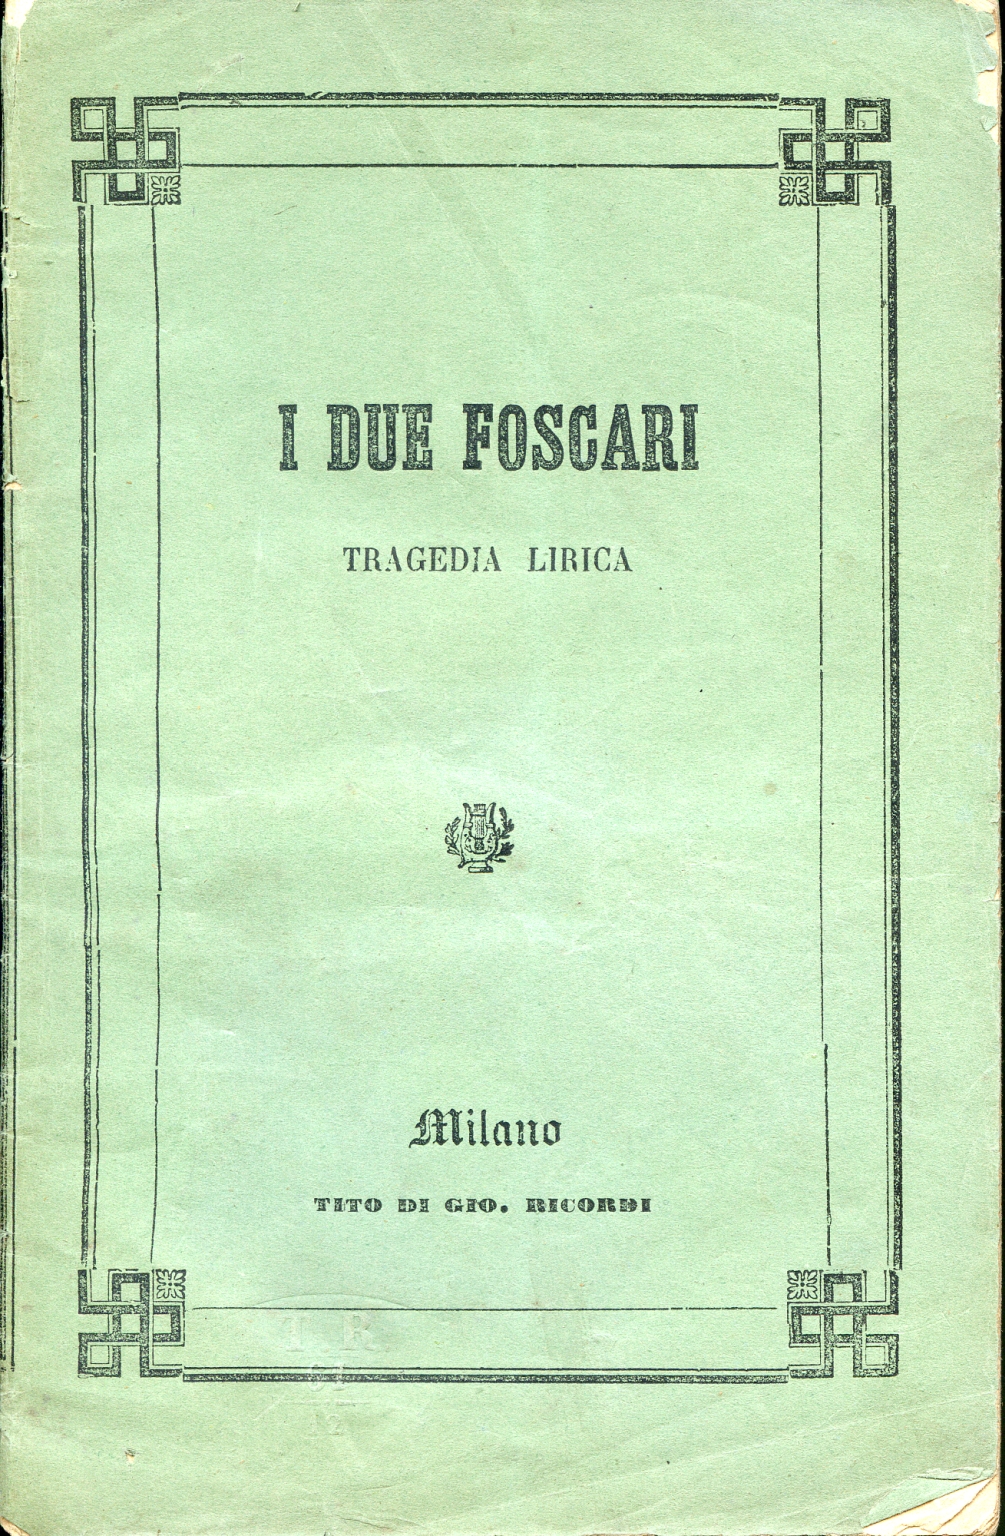 The two foscari, Giuseppe Verdi